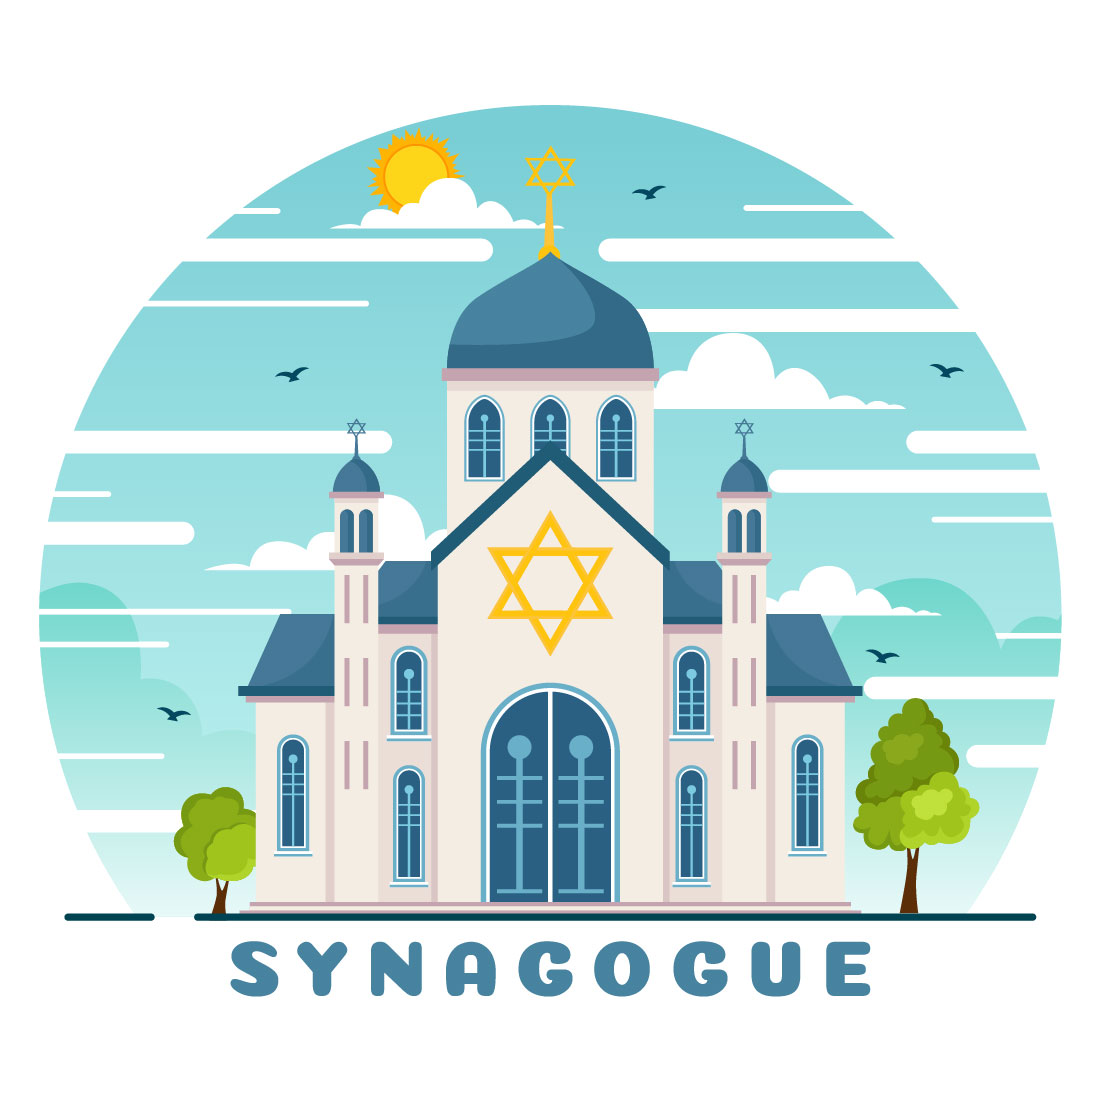 10 Synagogue Building Illustration cover image.